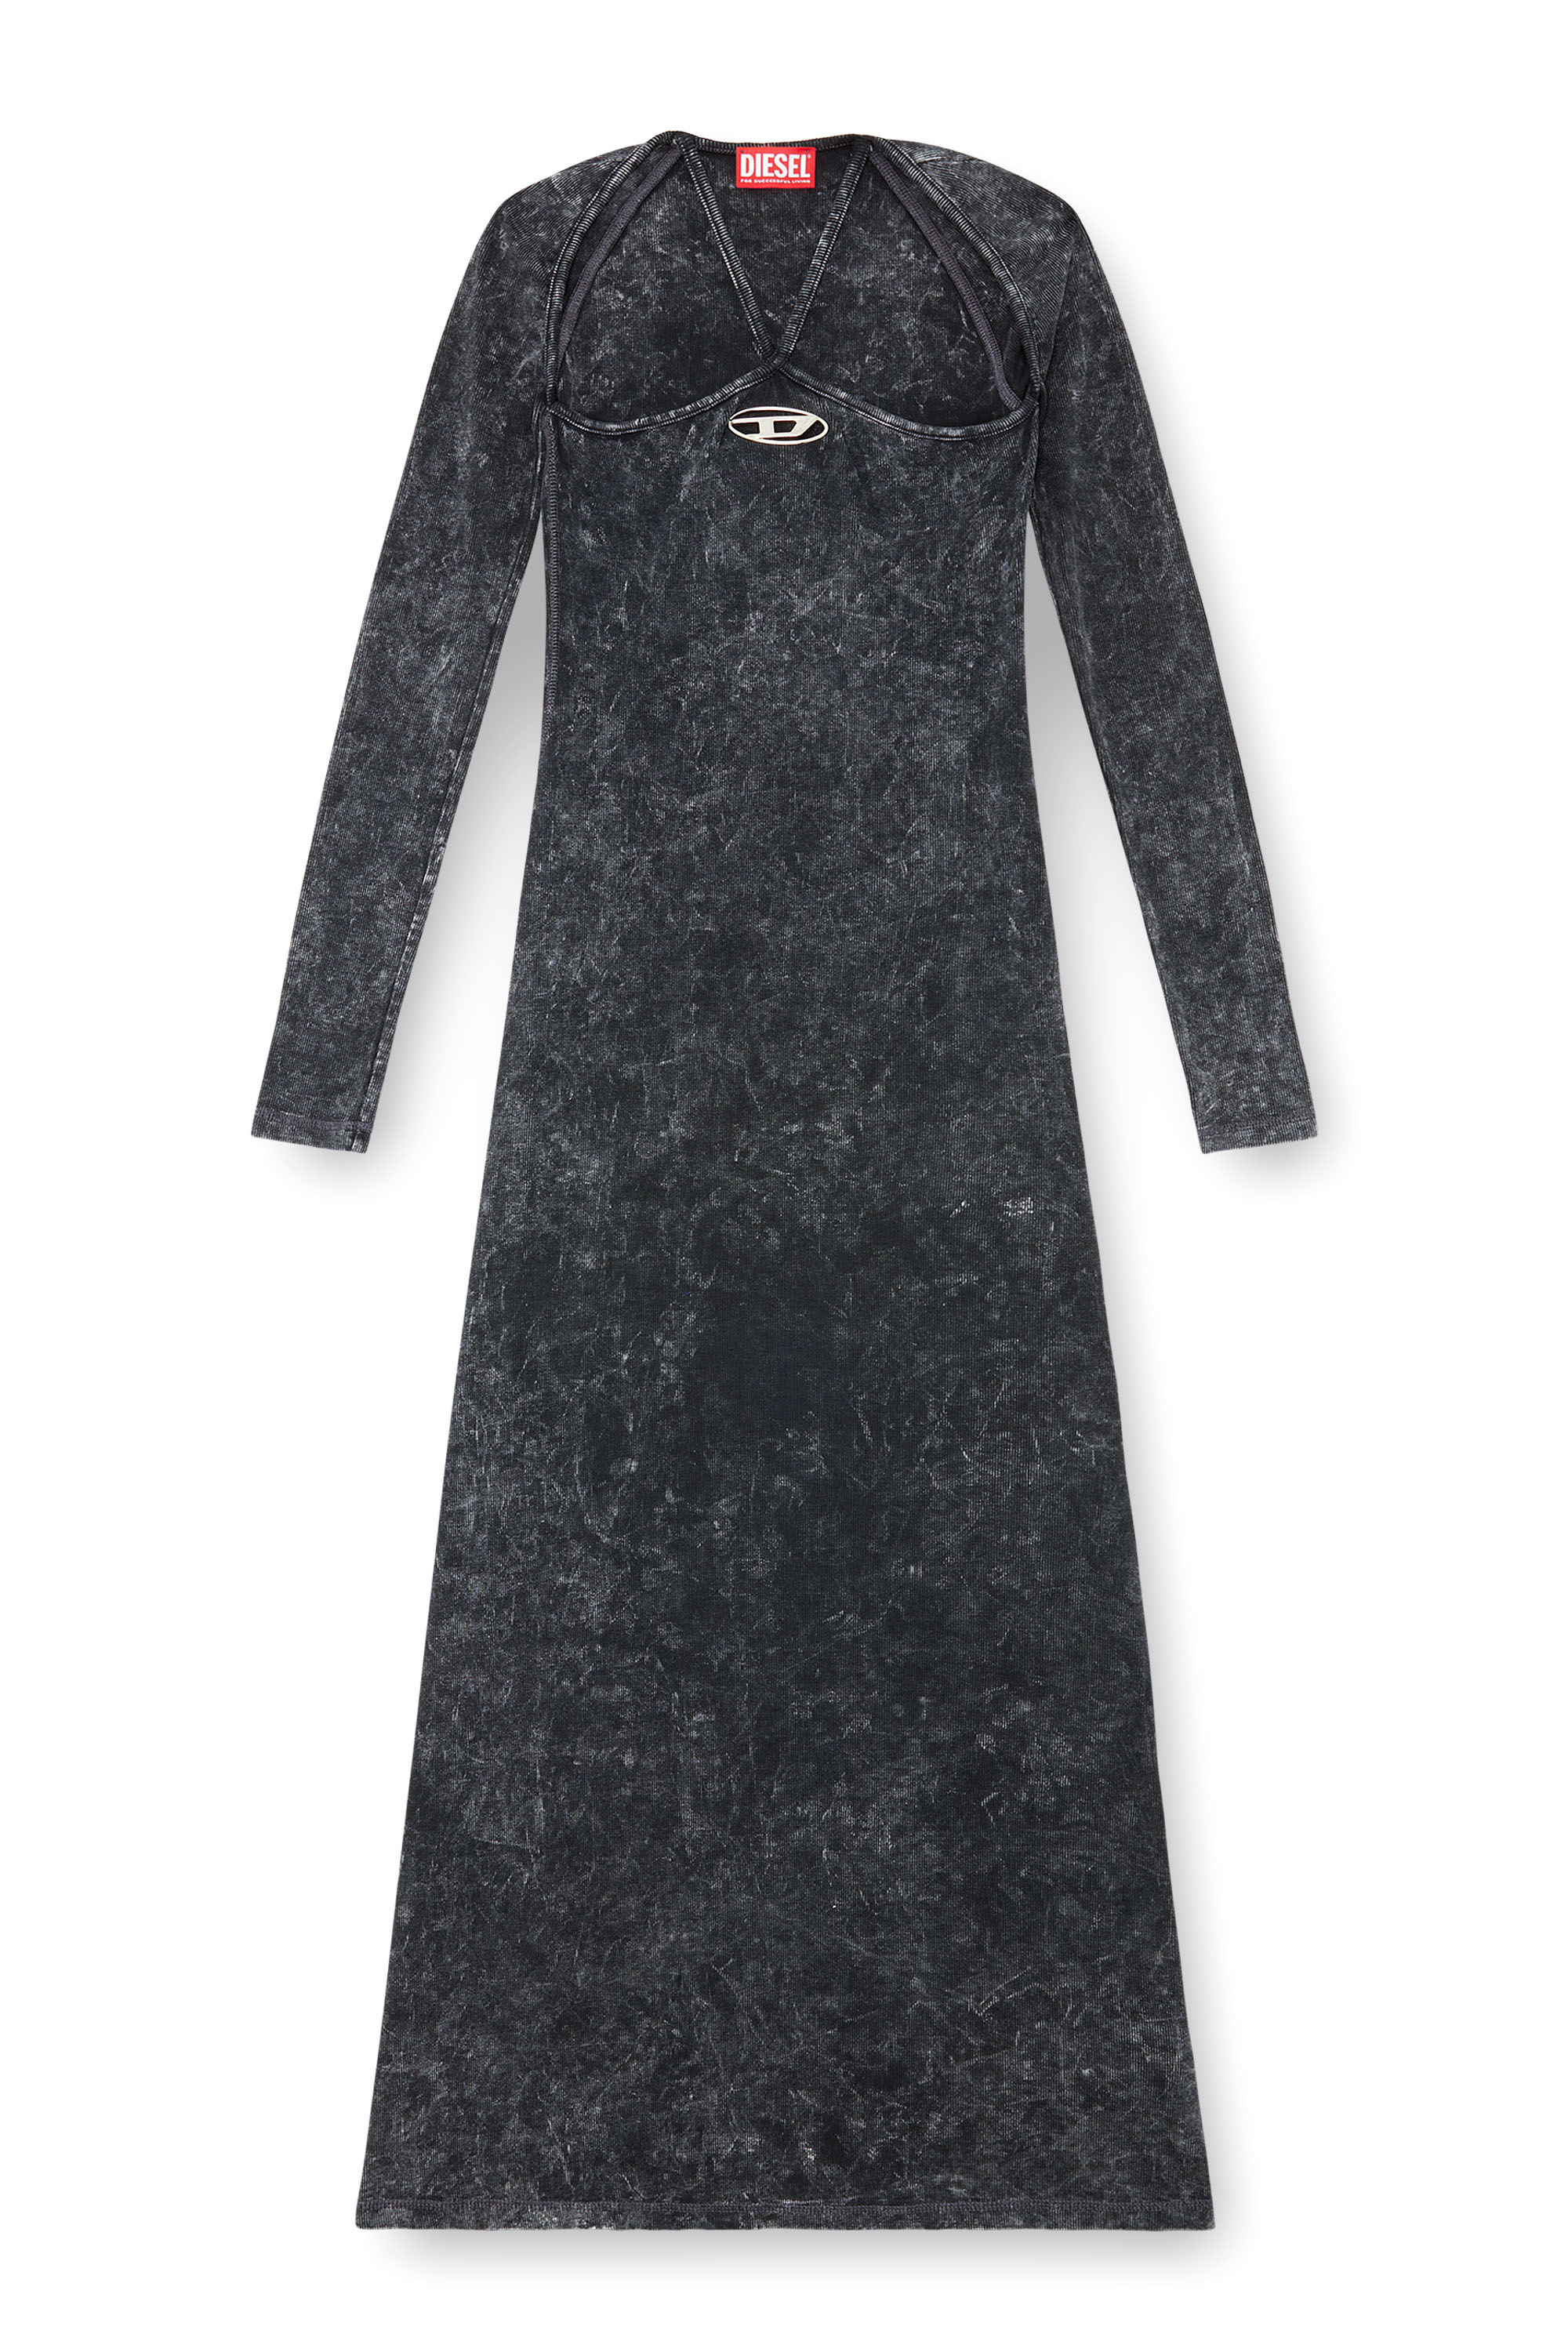 Diesel - D-MARINEL, Damen Langes Kleid in marmorierter Optik in Schwarz - Image 4